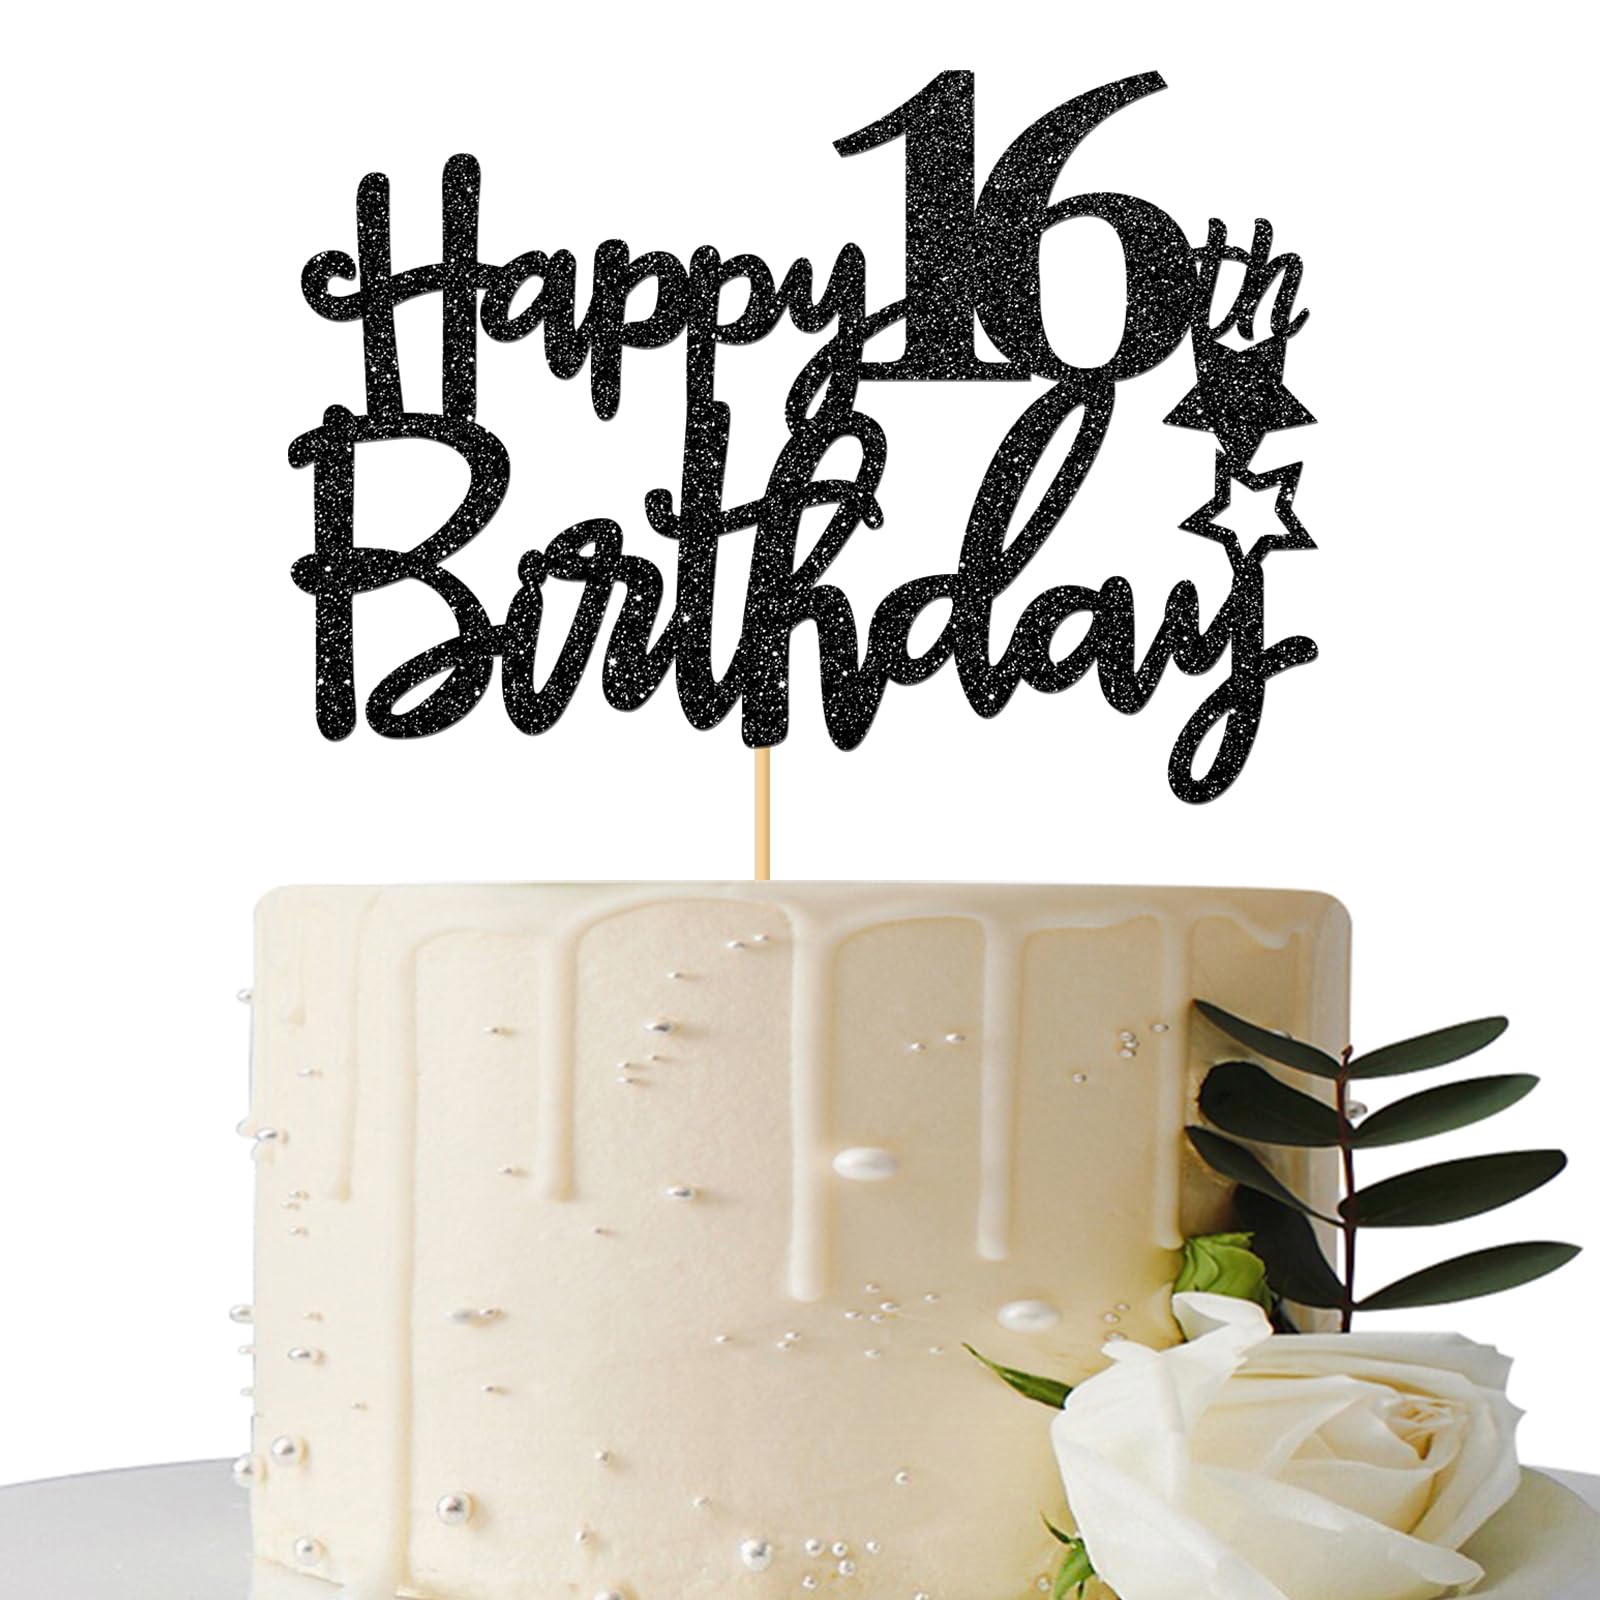 Premium Vector | Draw freehand style birthday cake black graphics on white  background